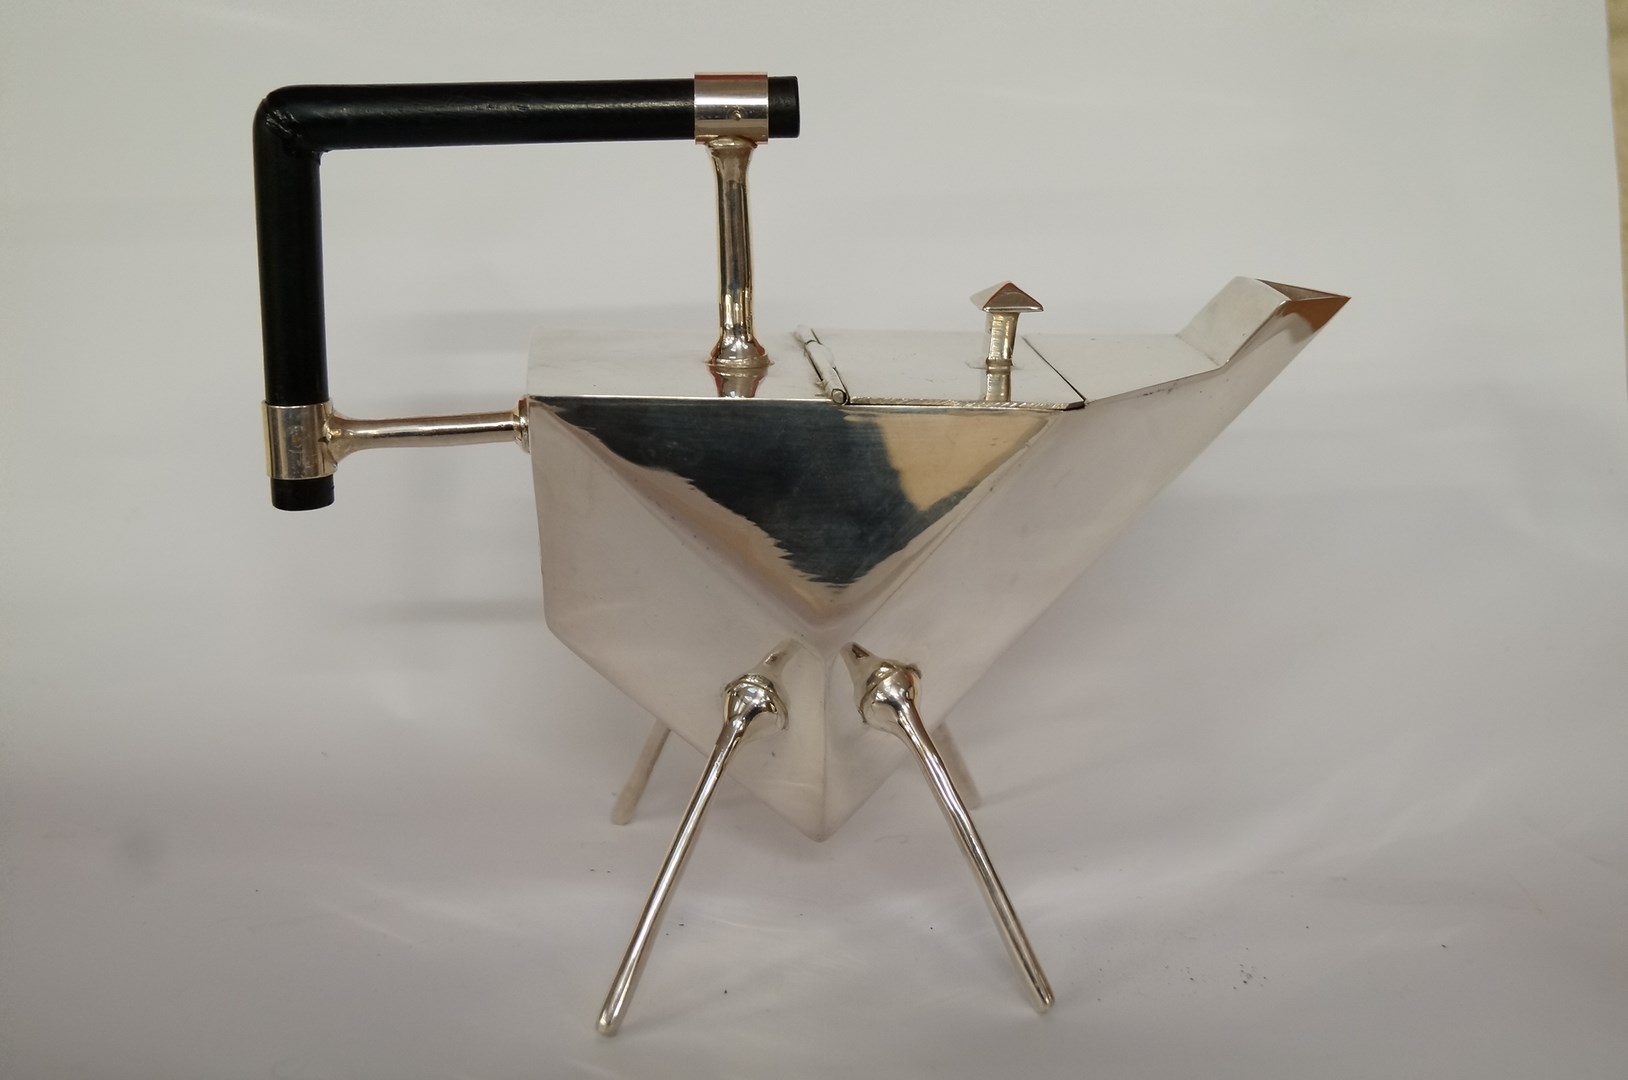 A copy of a teapot after a design by Christopher Dresser, 22.5cm long